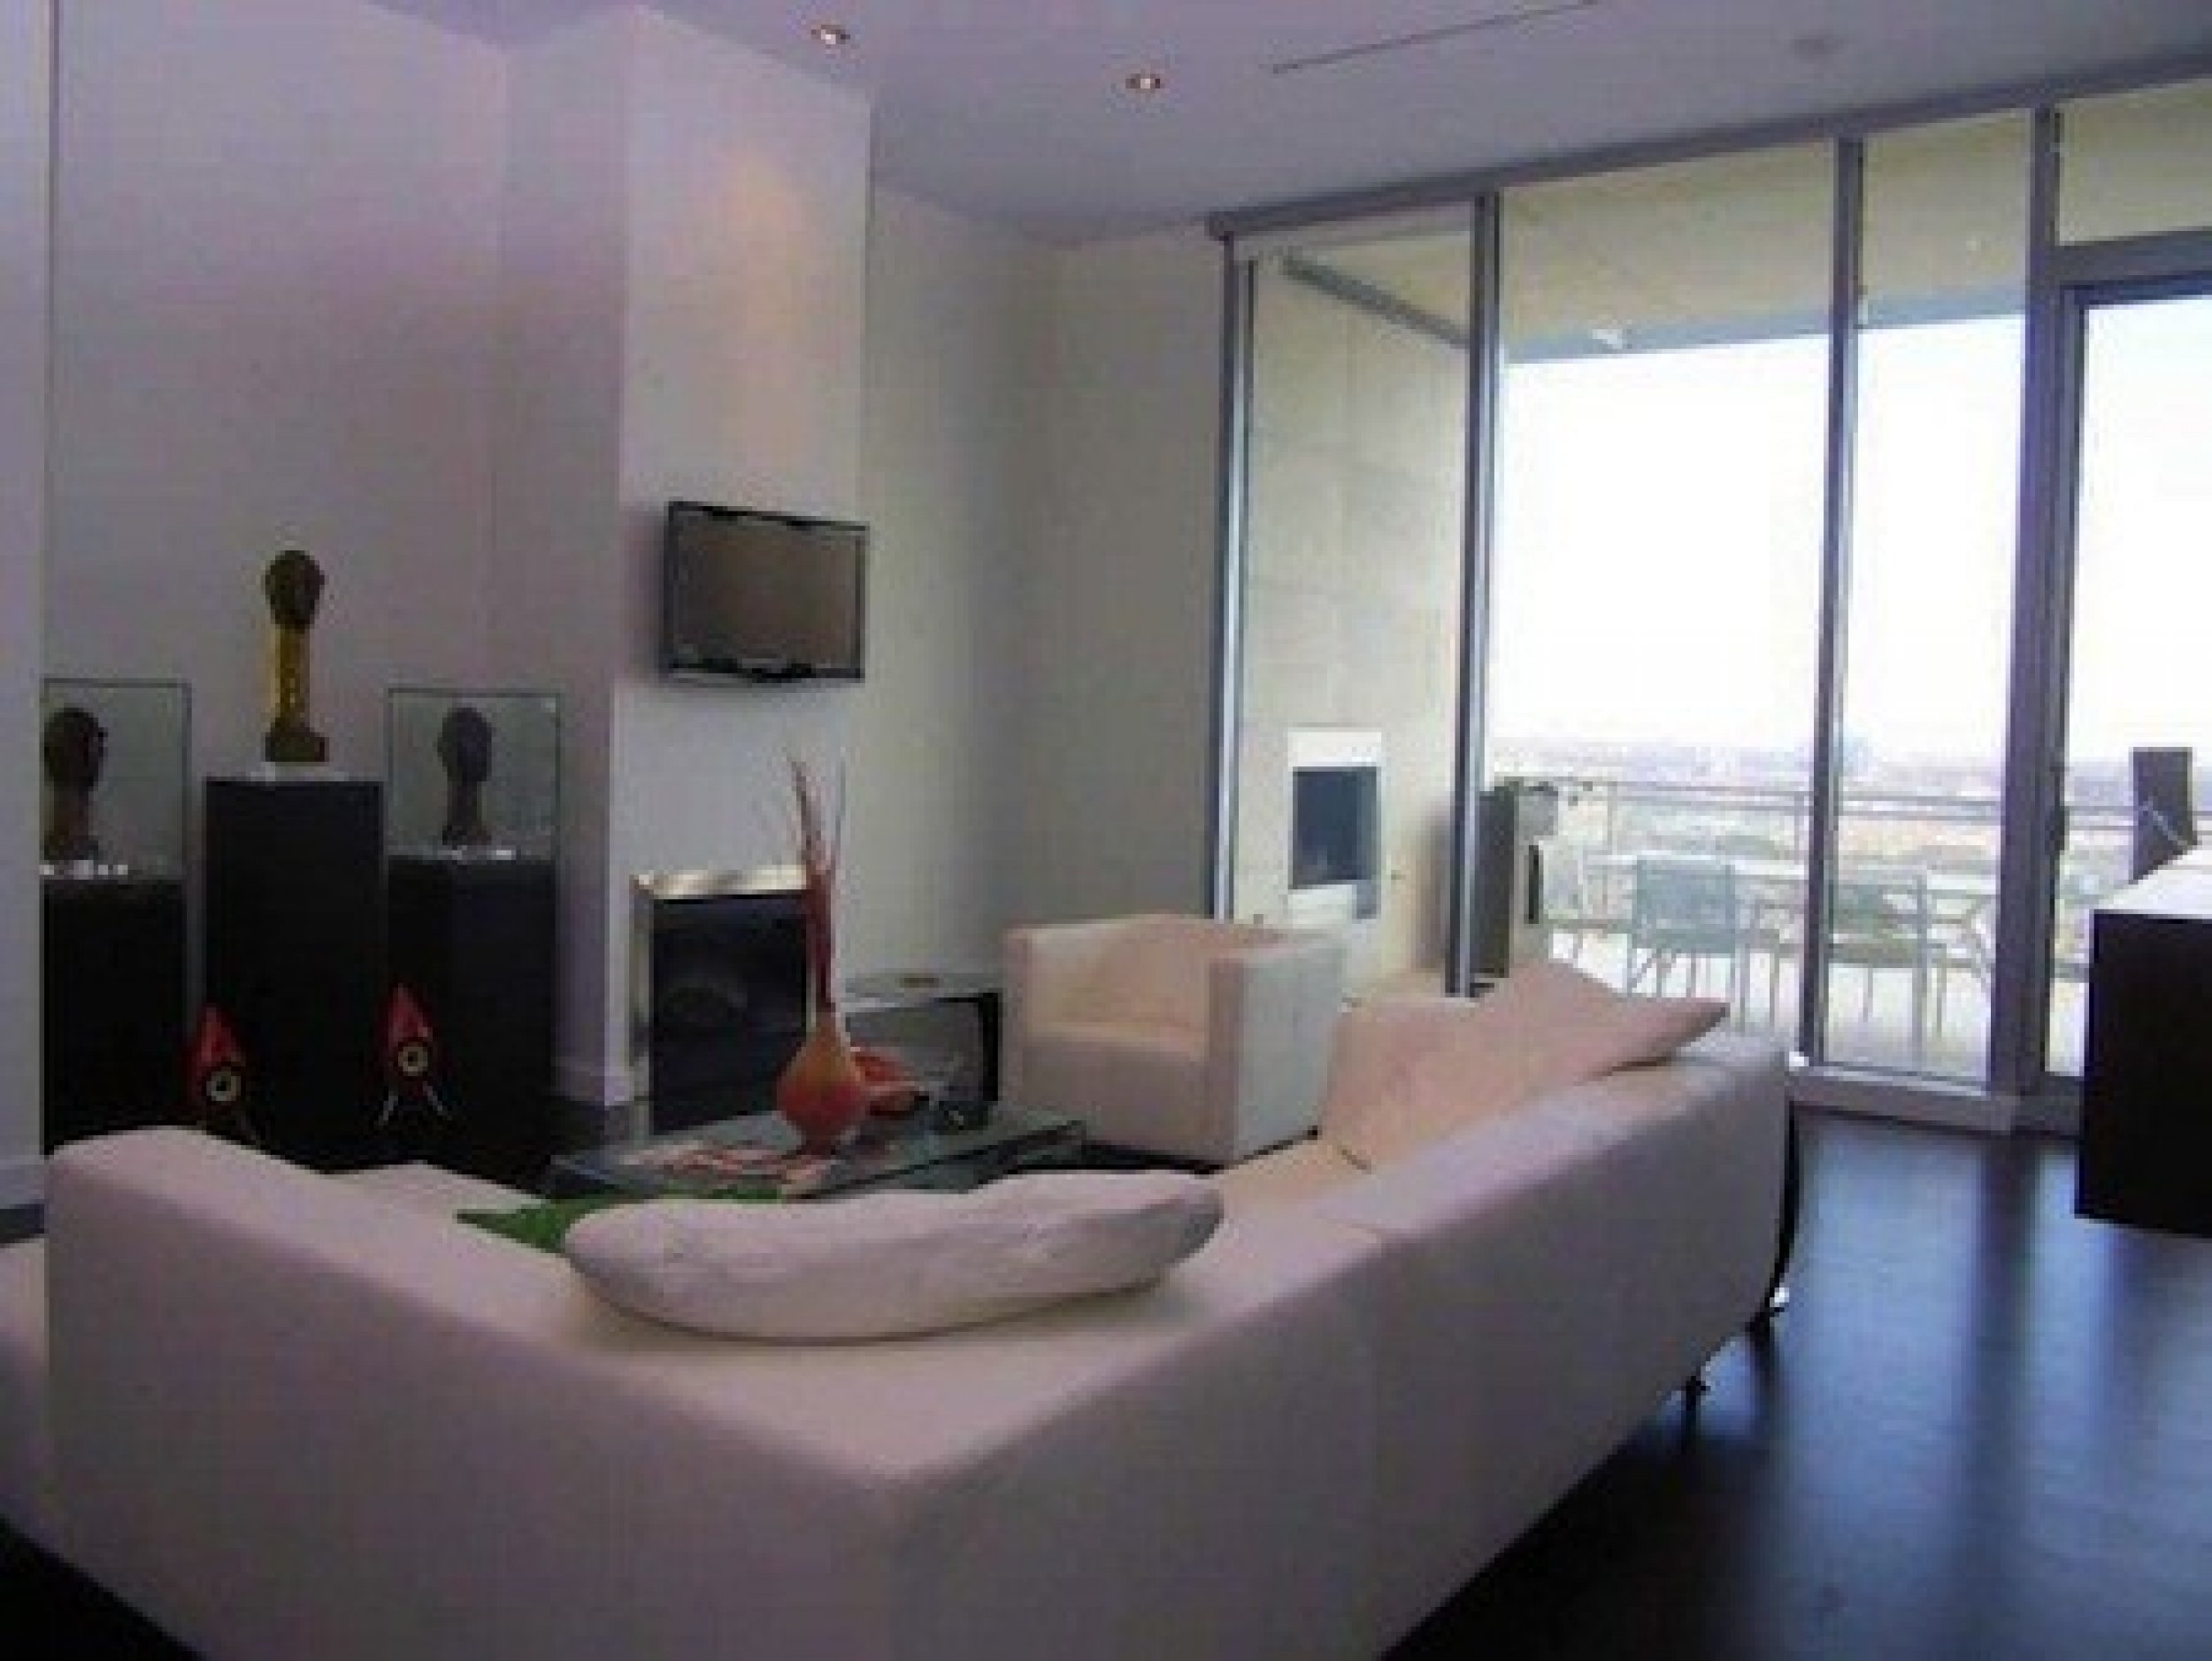 Penthouse condo living room